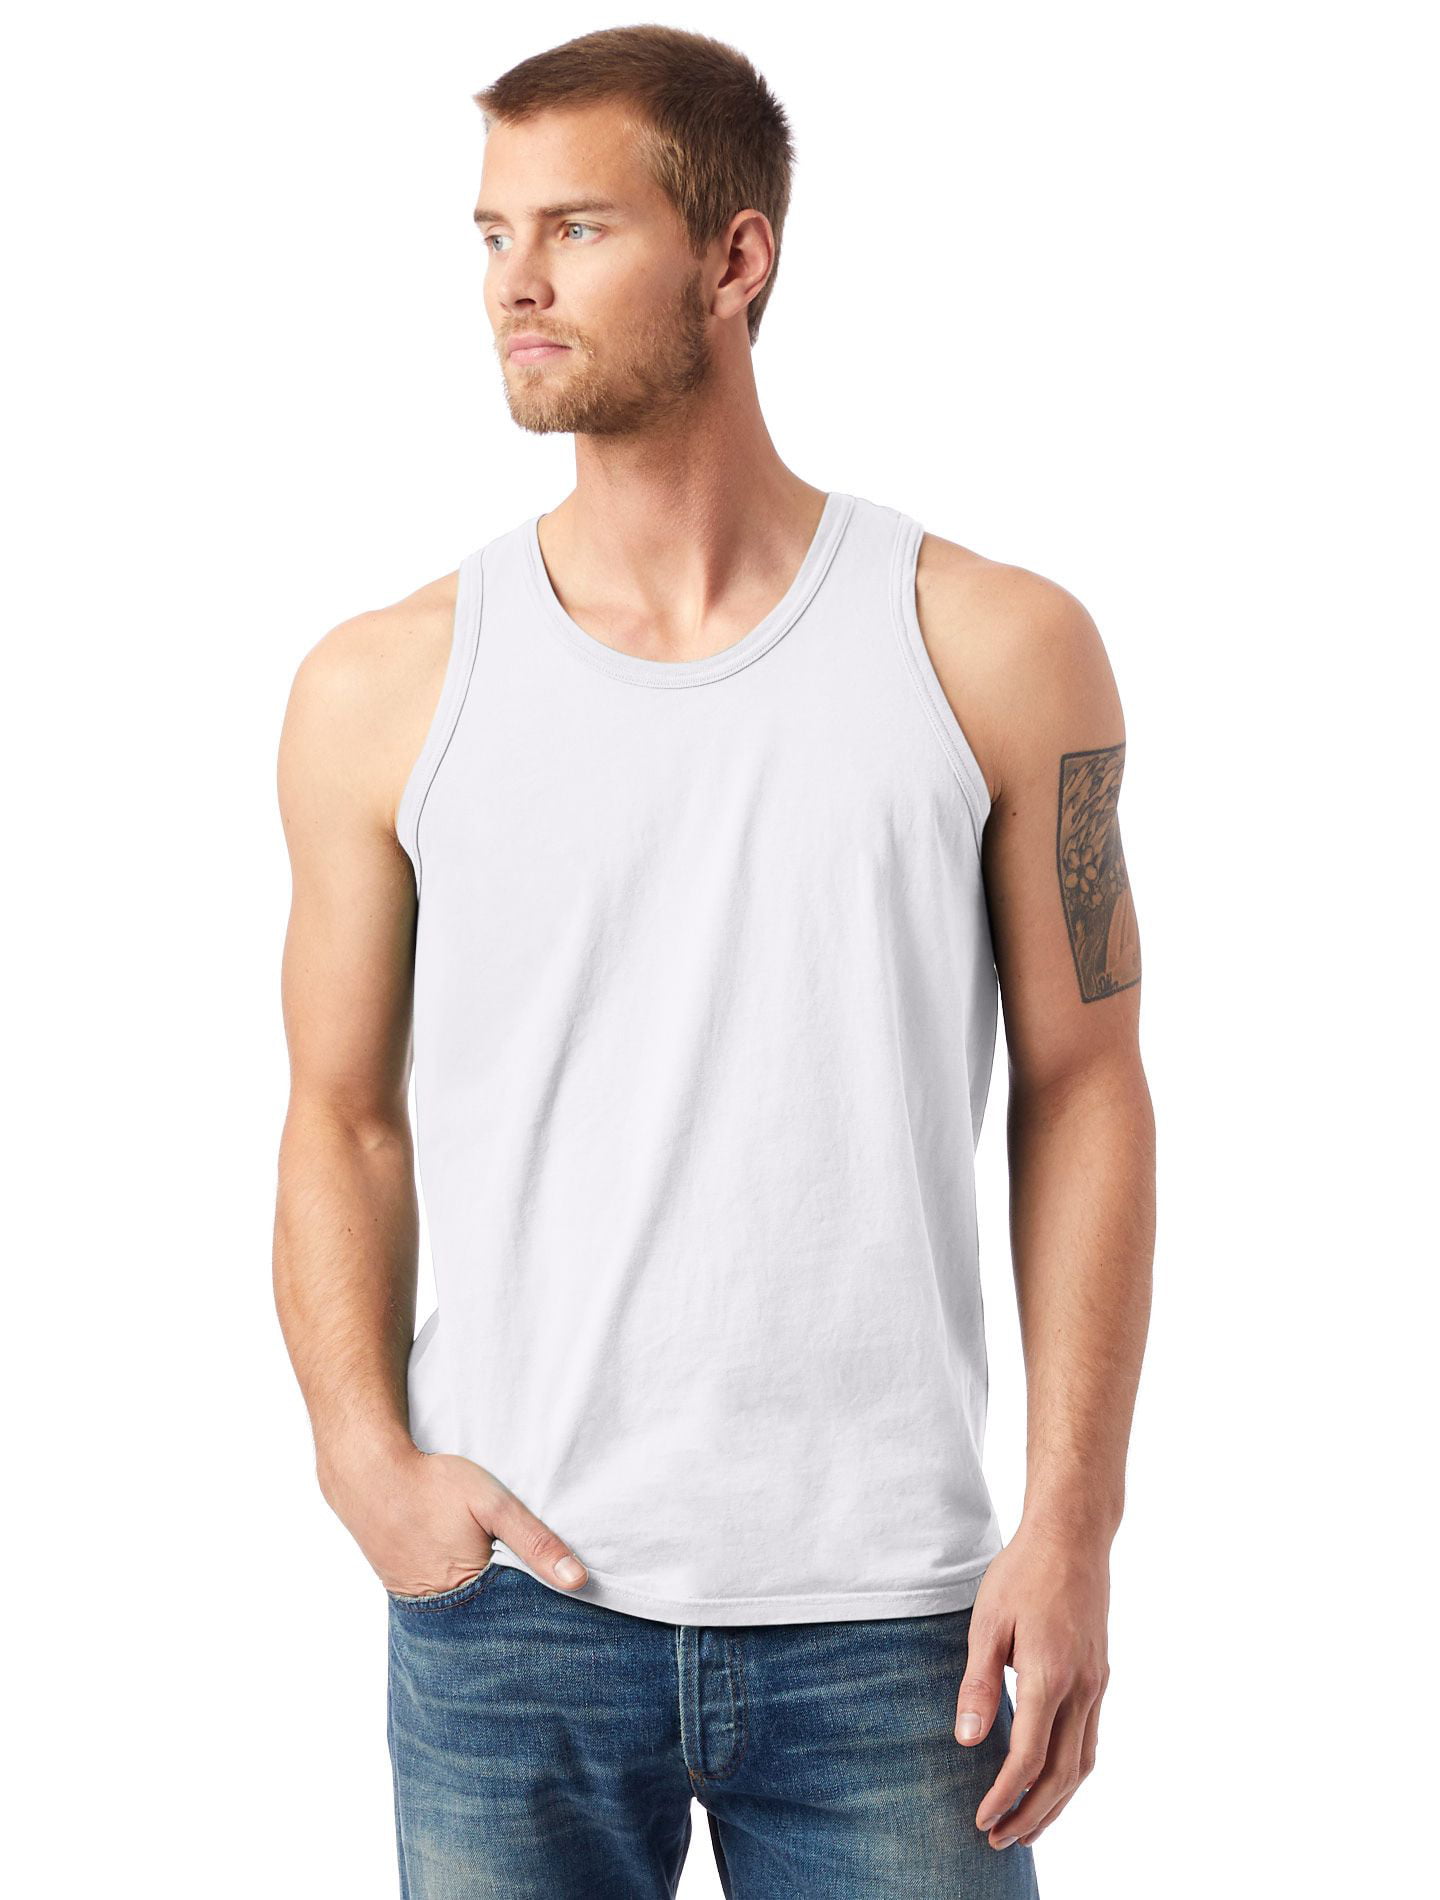 Hanes Men's ComfortWash Garment Dyed Sleeveless Tank Top 